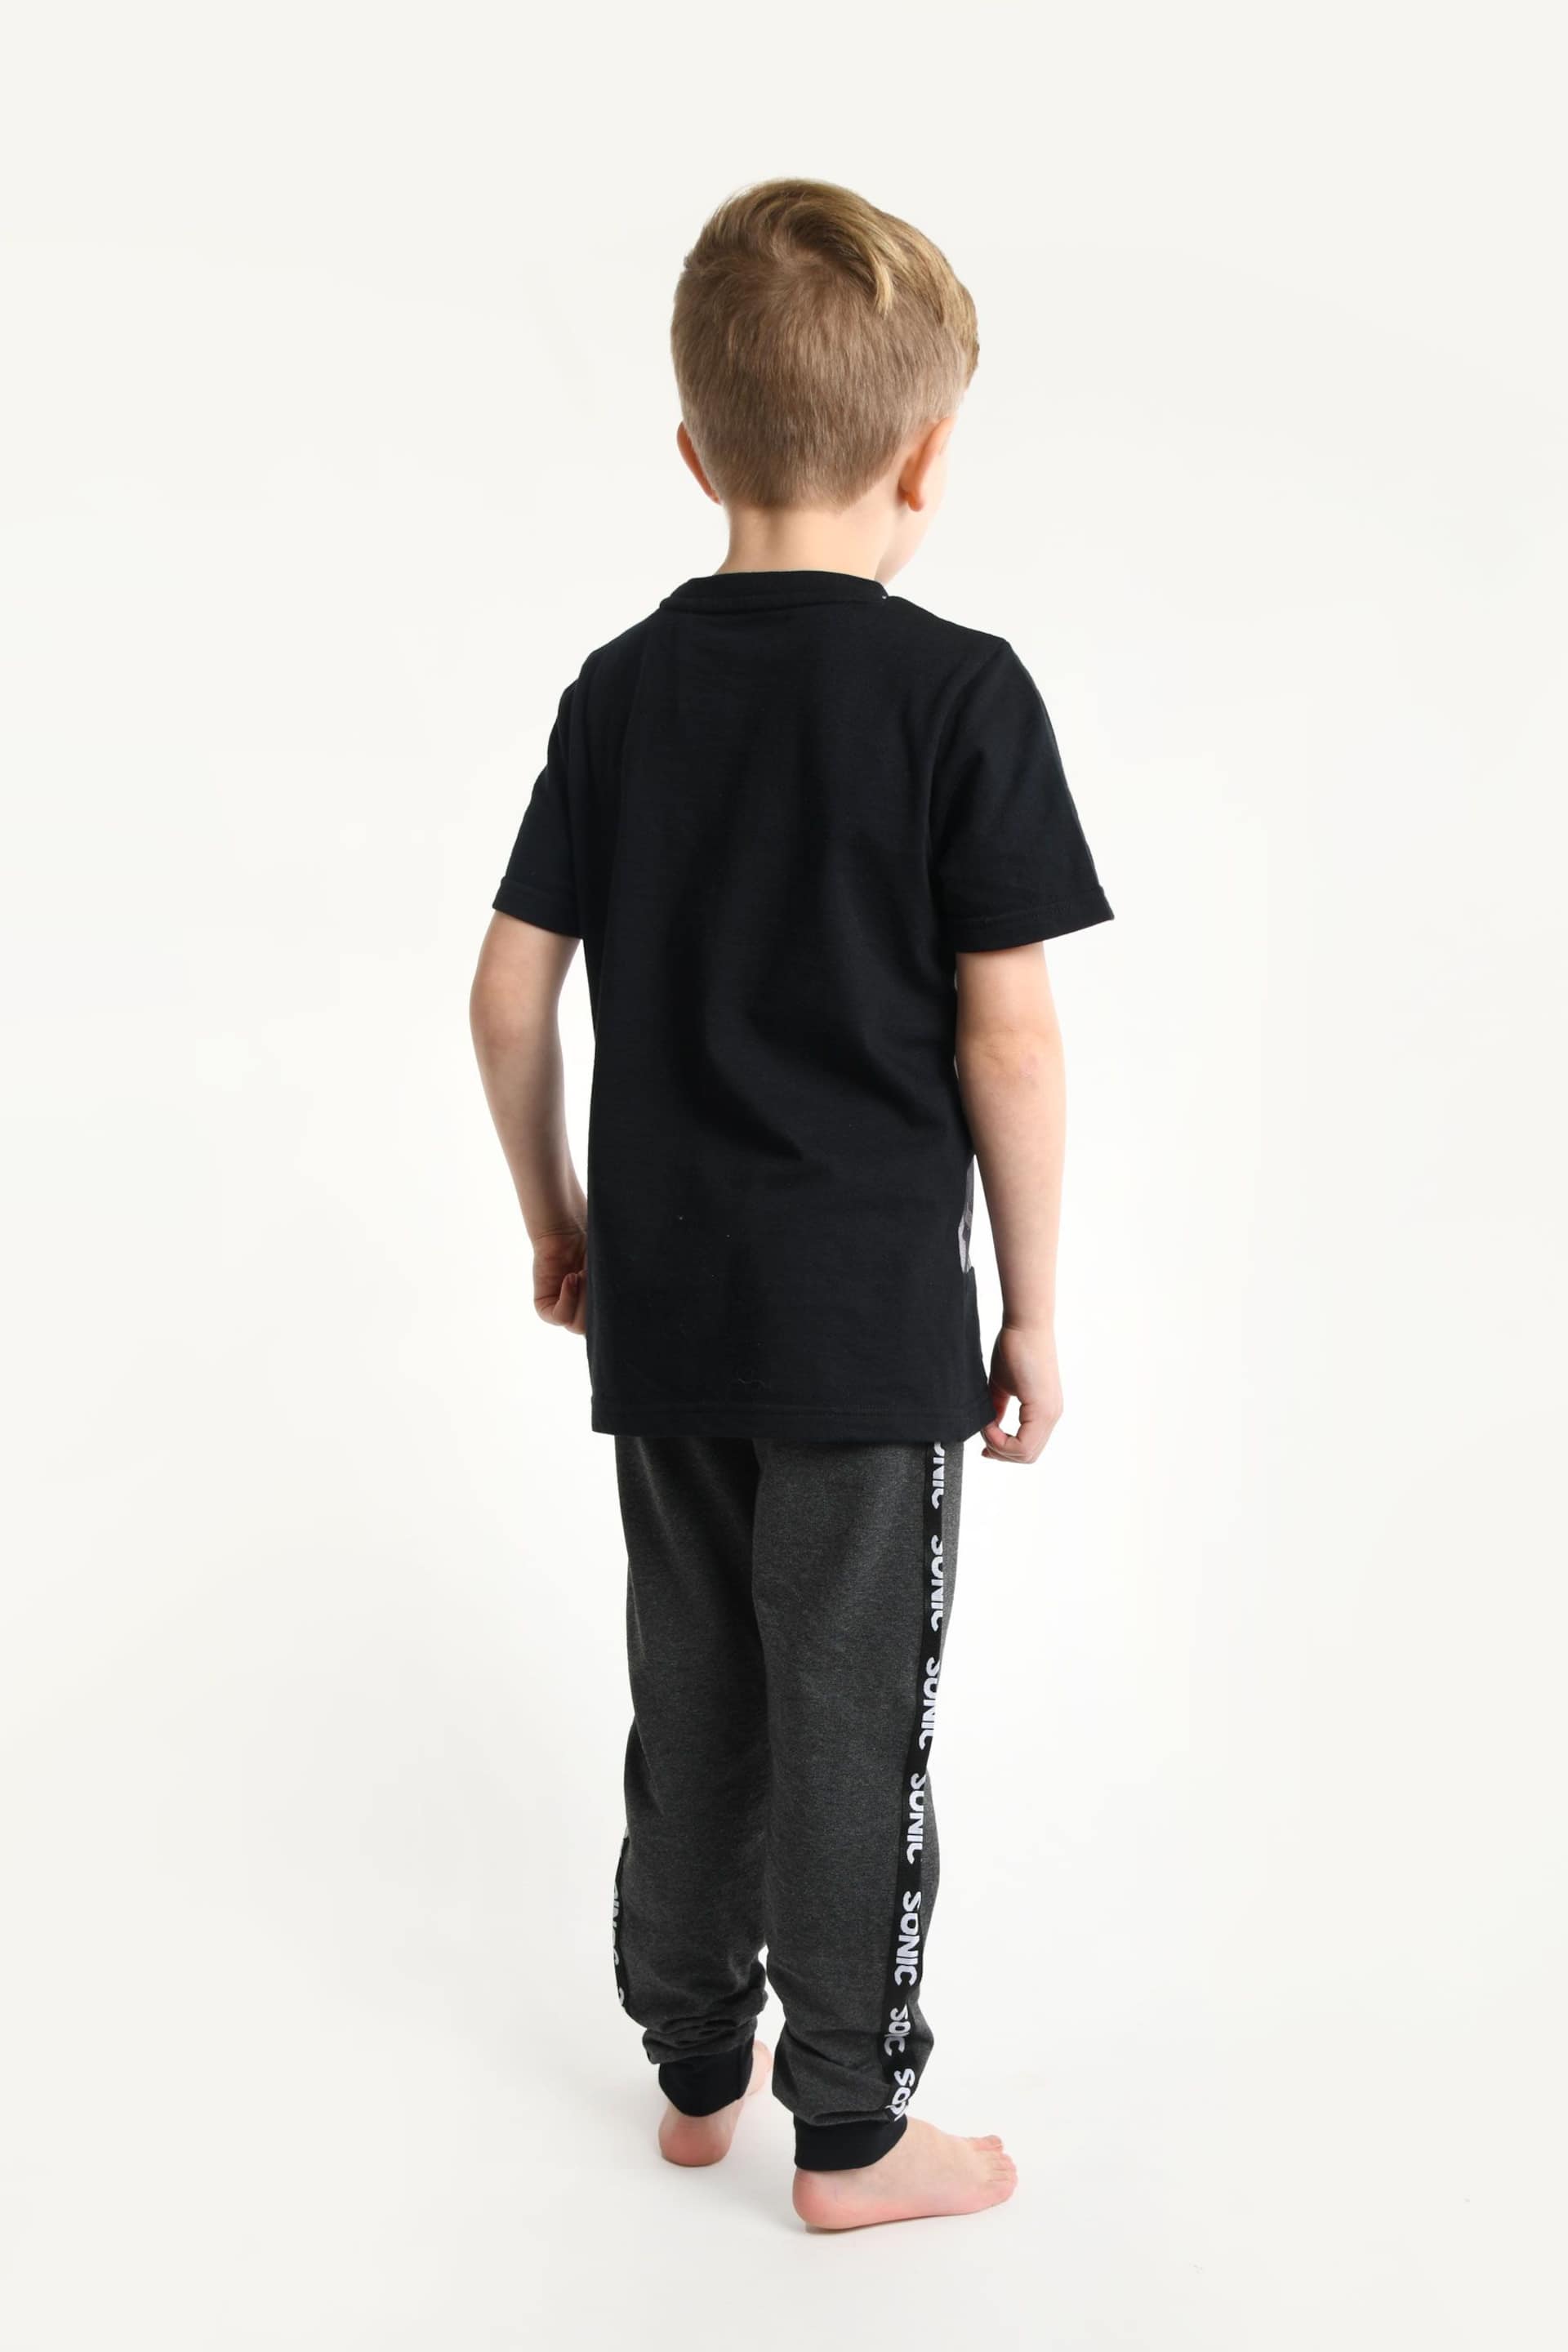 Brand Threads Black LEGO Ninjago Boys Pyjama Set - Image 2 of 5